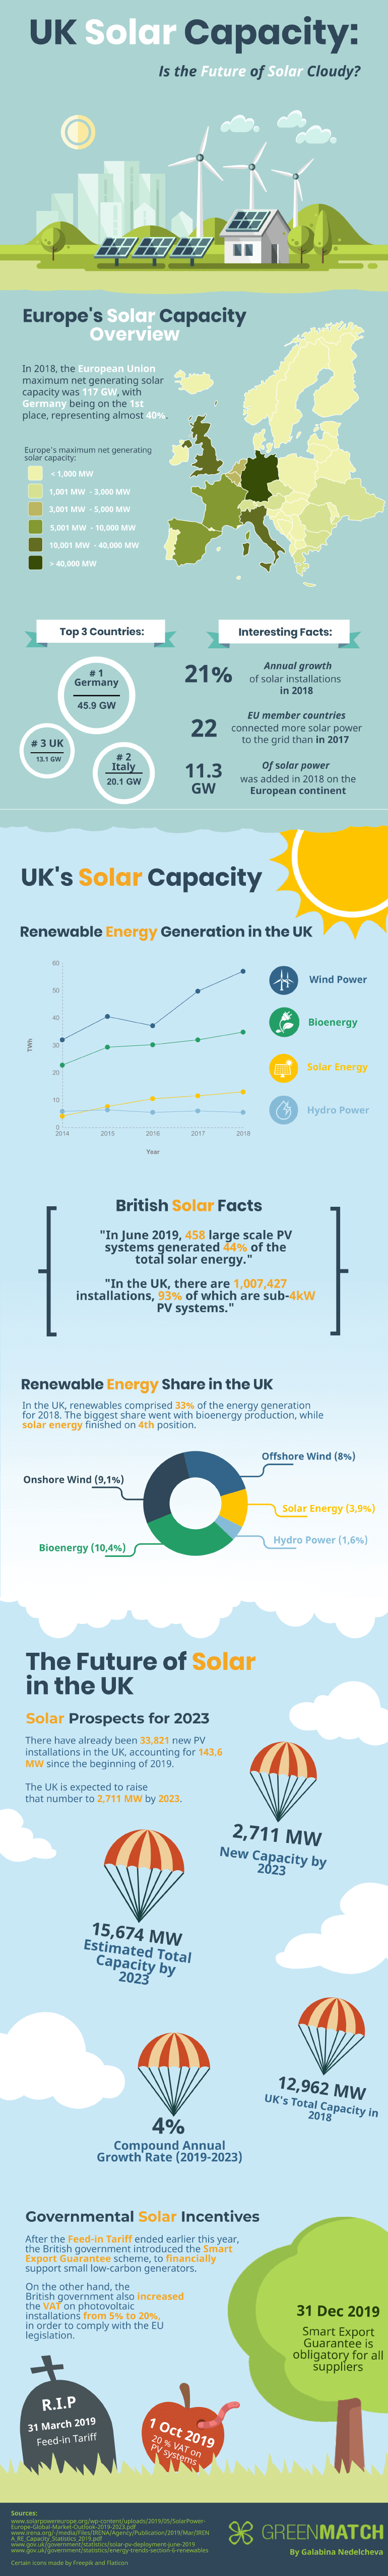 UK Solar Capacity Infographic